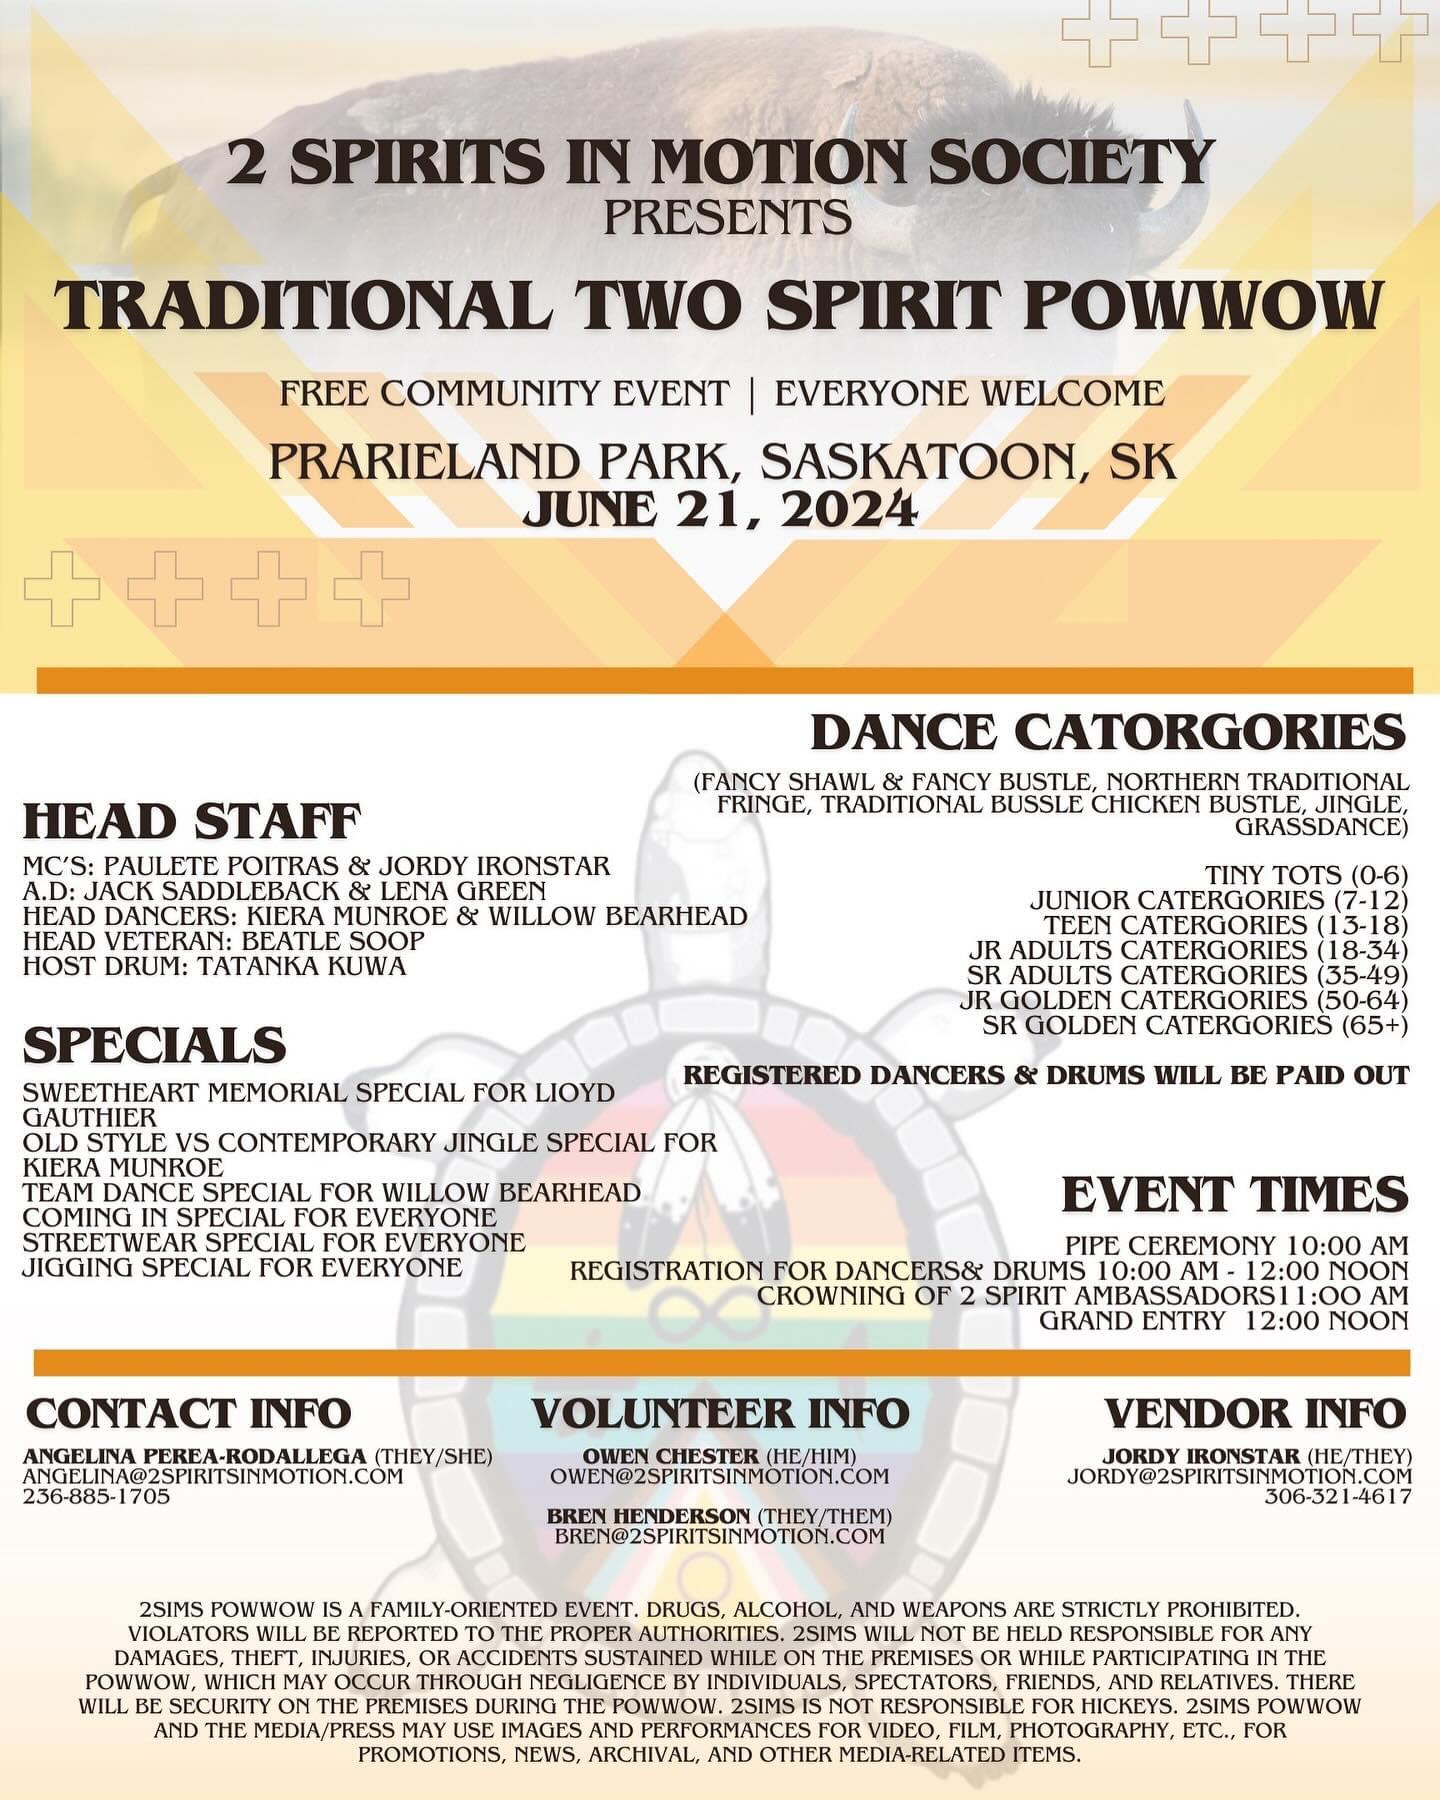 Schedule for Two Spirit Powwow June 21